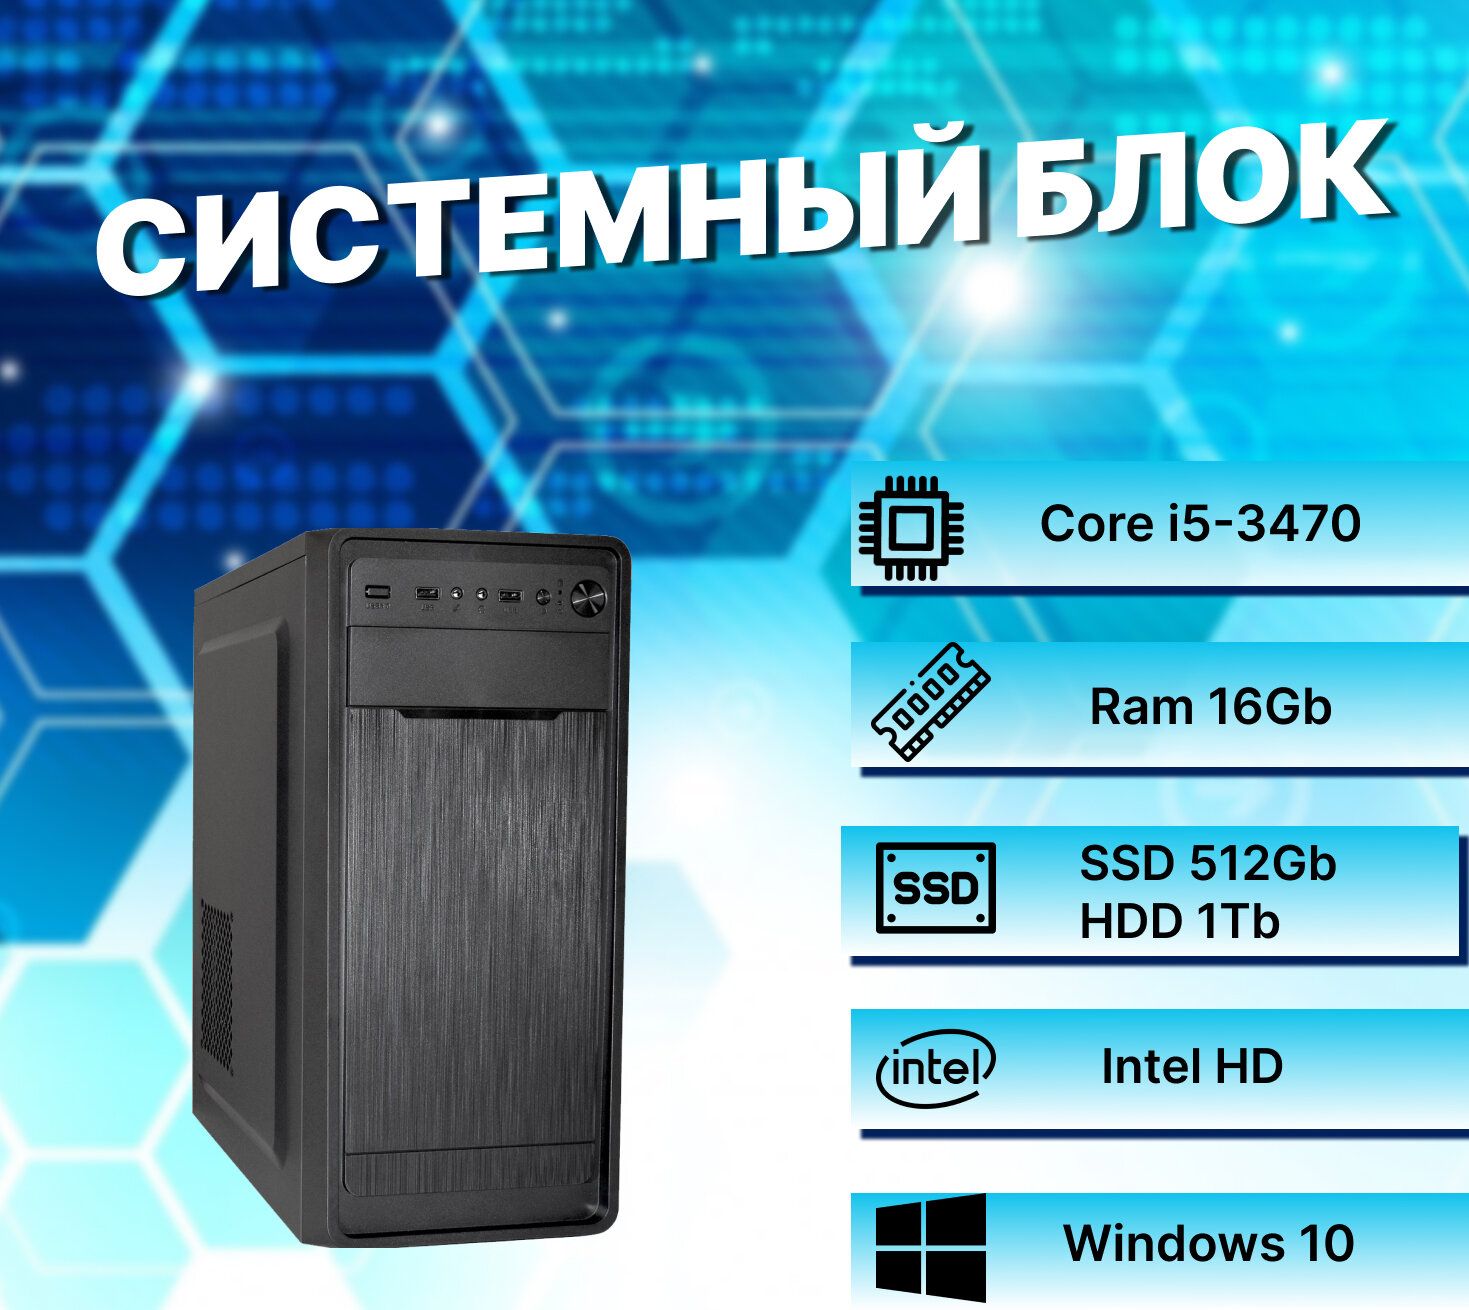 Системный блок Intel Core I5-3470 (3.2ГГц)/ RAM 16Gb/ SSD 512Gb/ HDD 1Tb/ Intel HD/ Windows 10 Pro